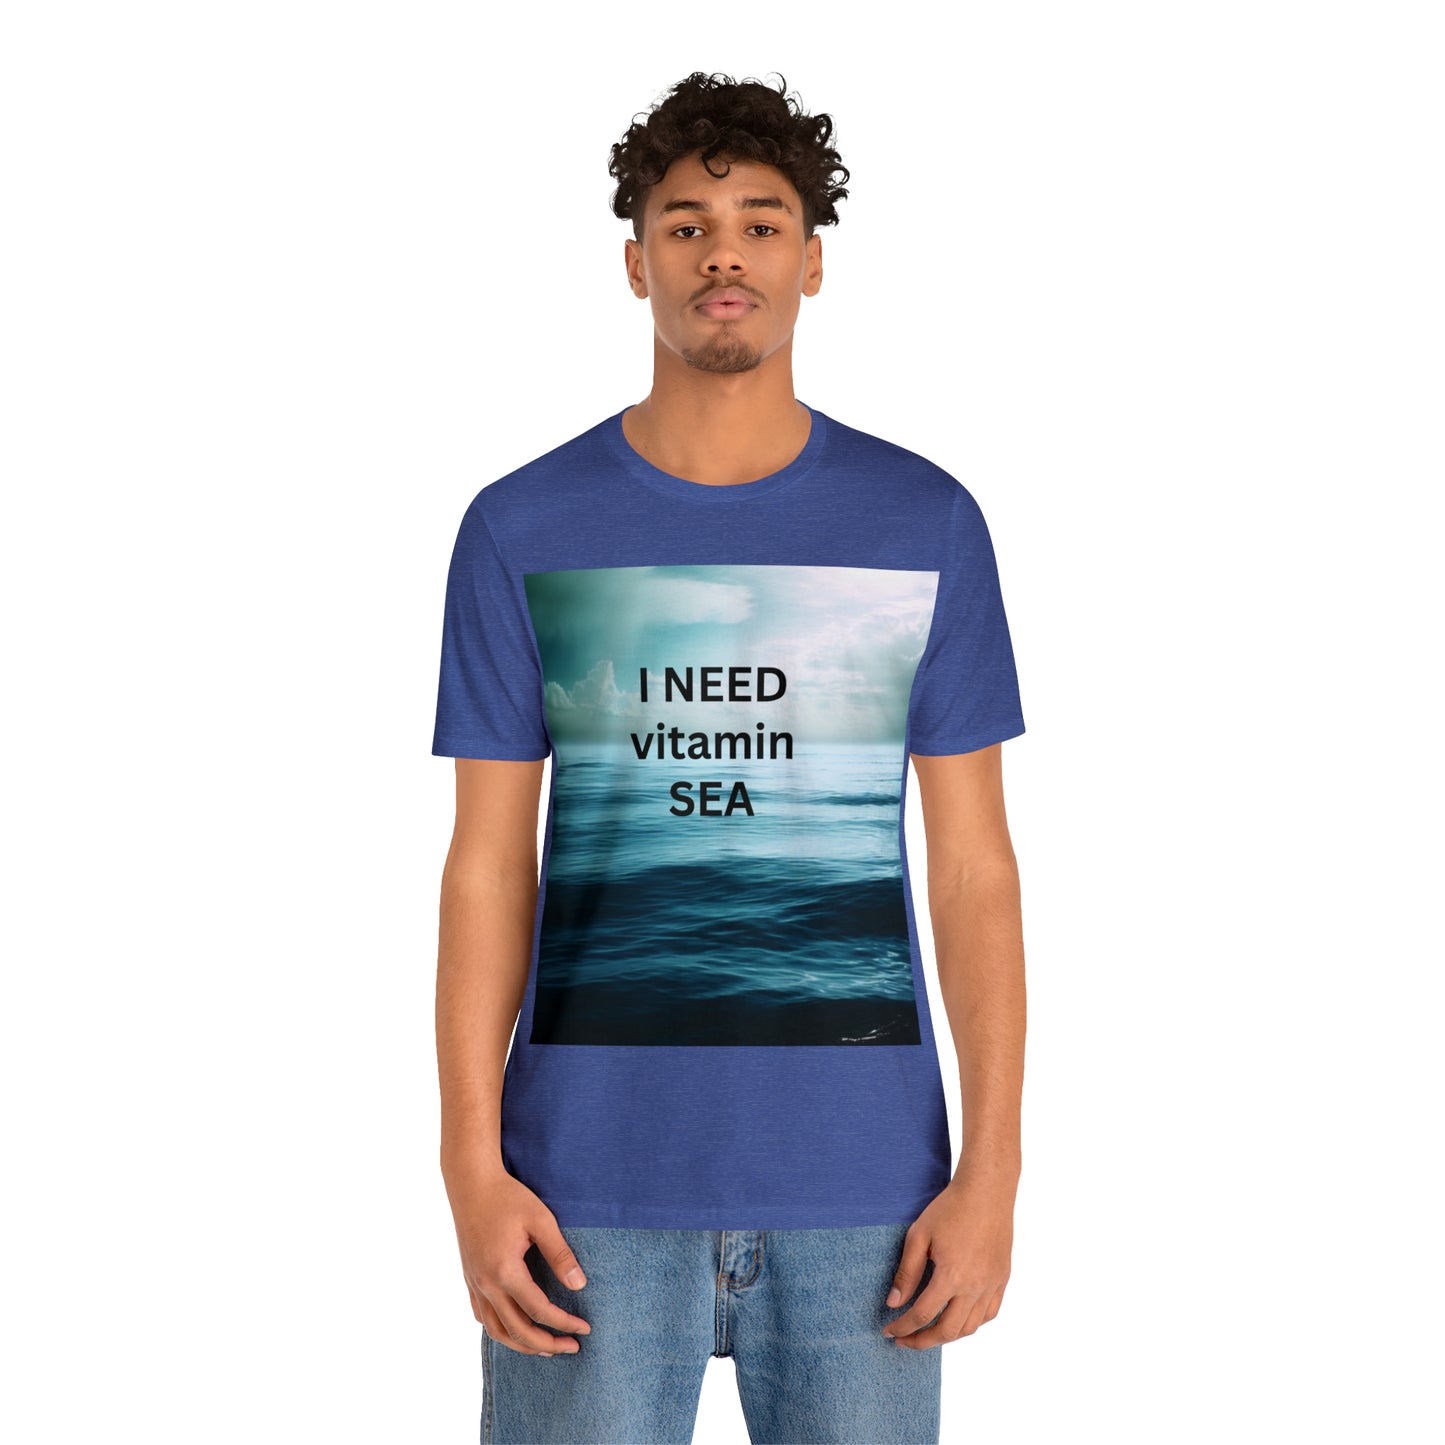 Sea T shirt